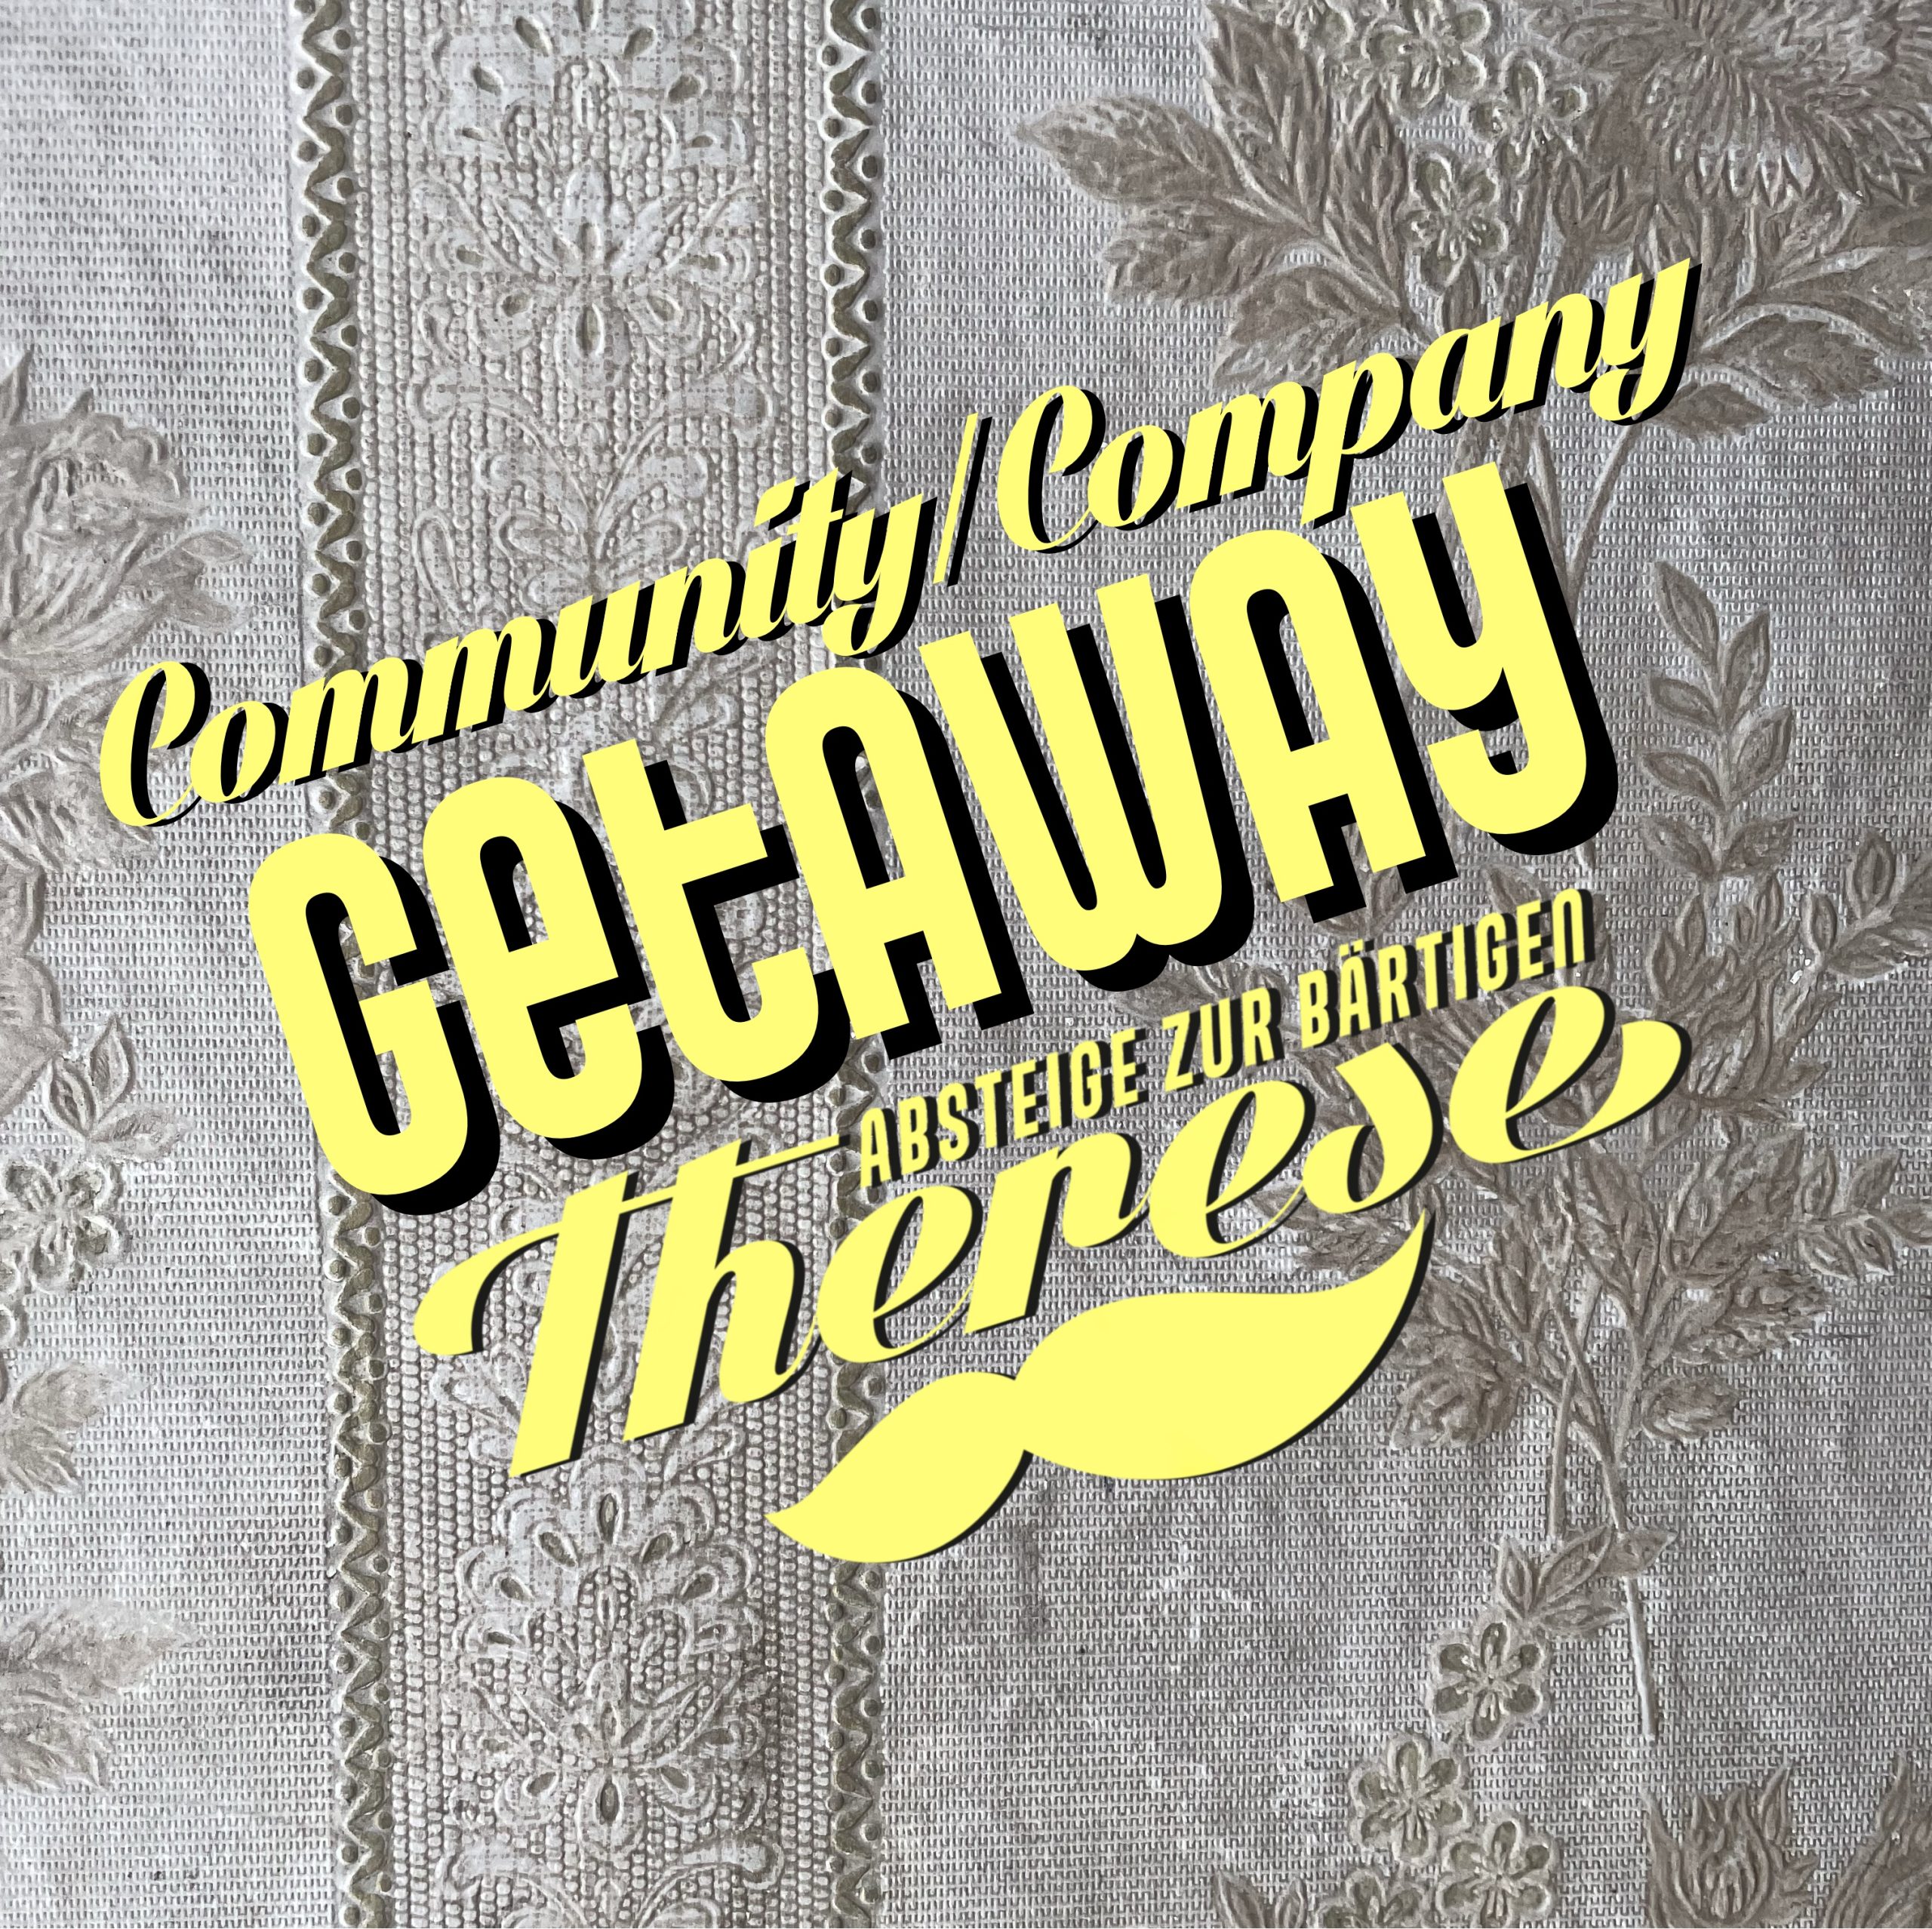 Community Getaway / Company Getaway